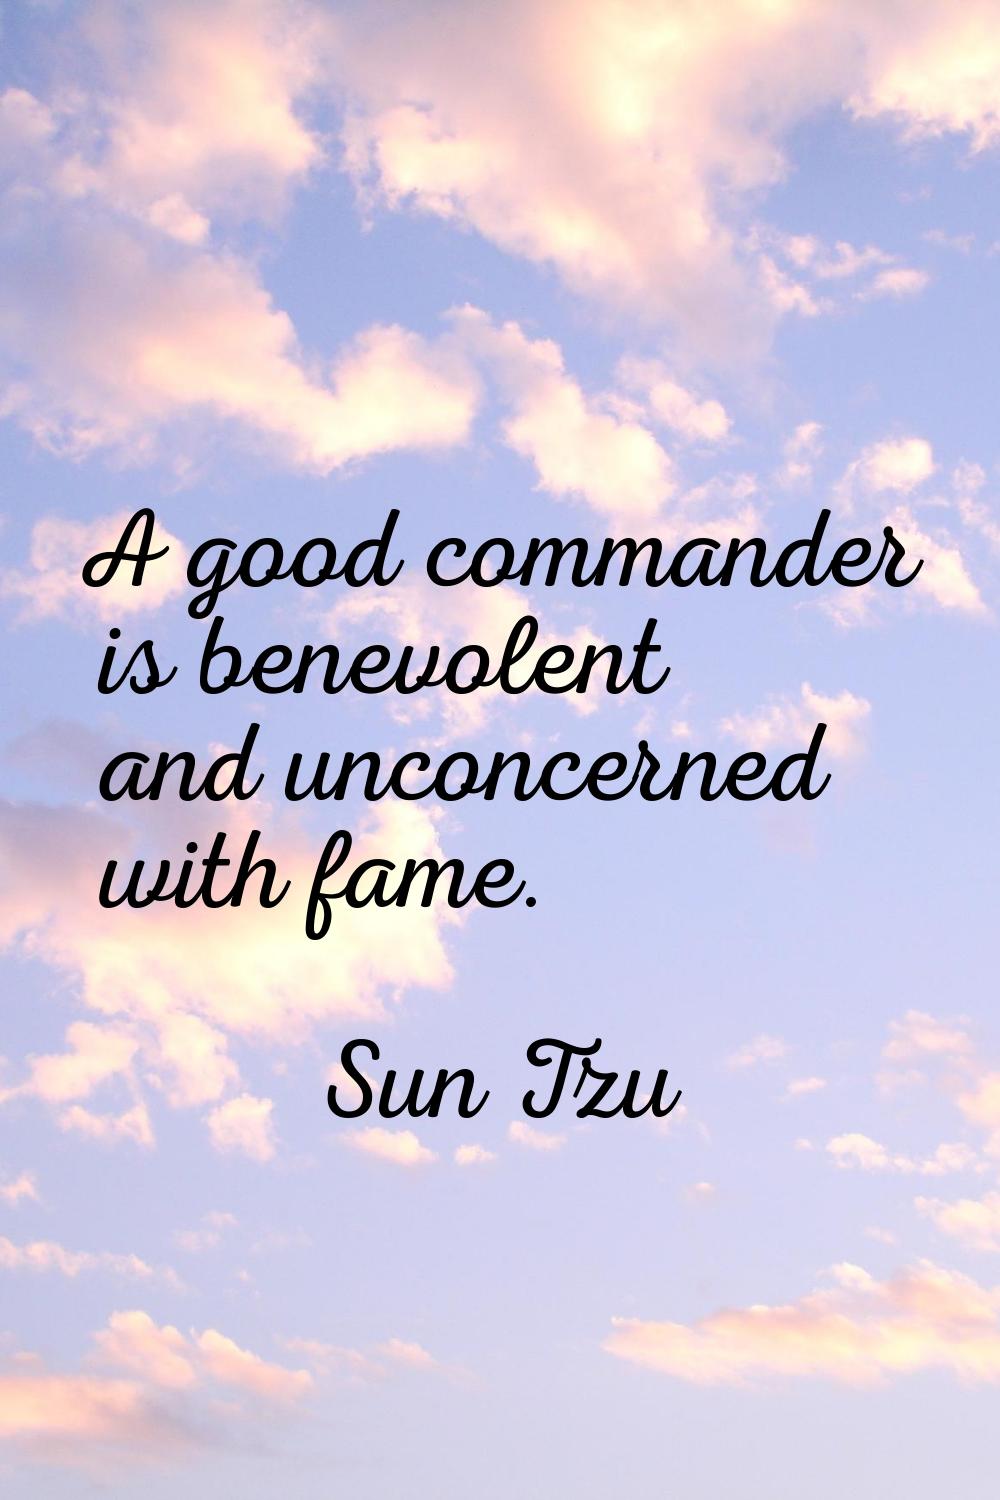 A good commander is benevolent and unconcerned with fame.